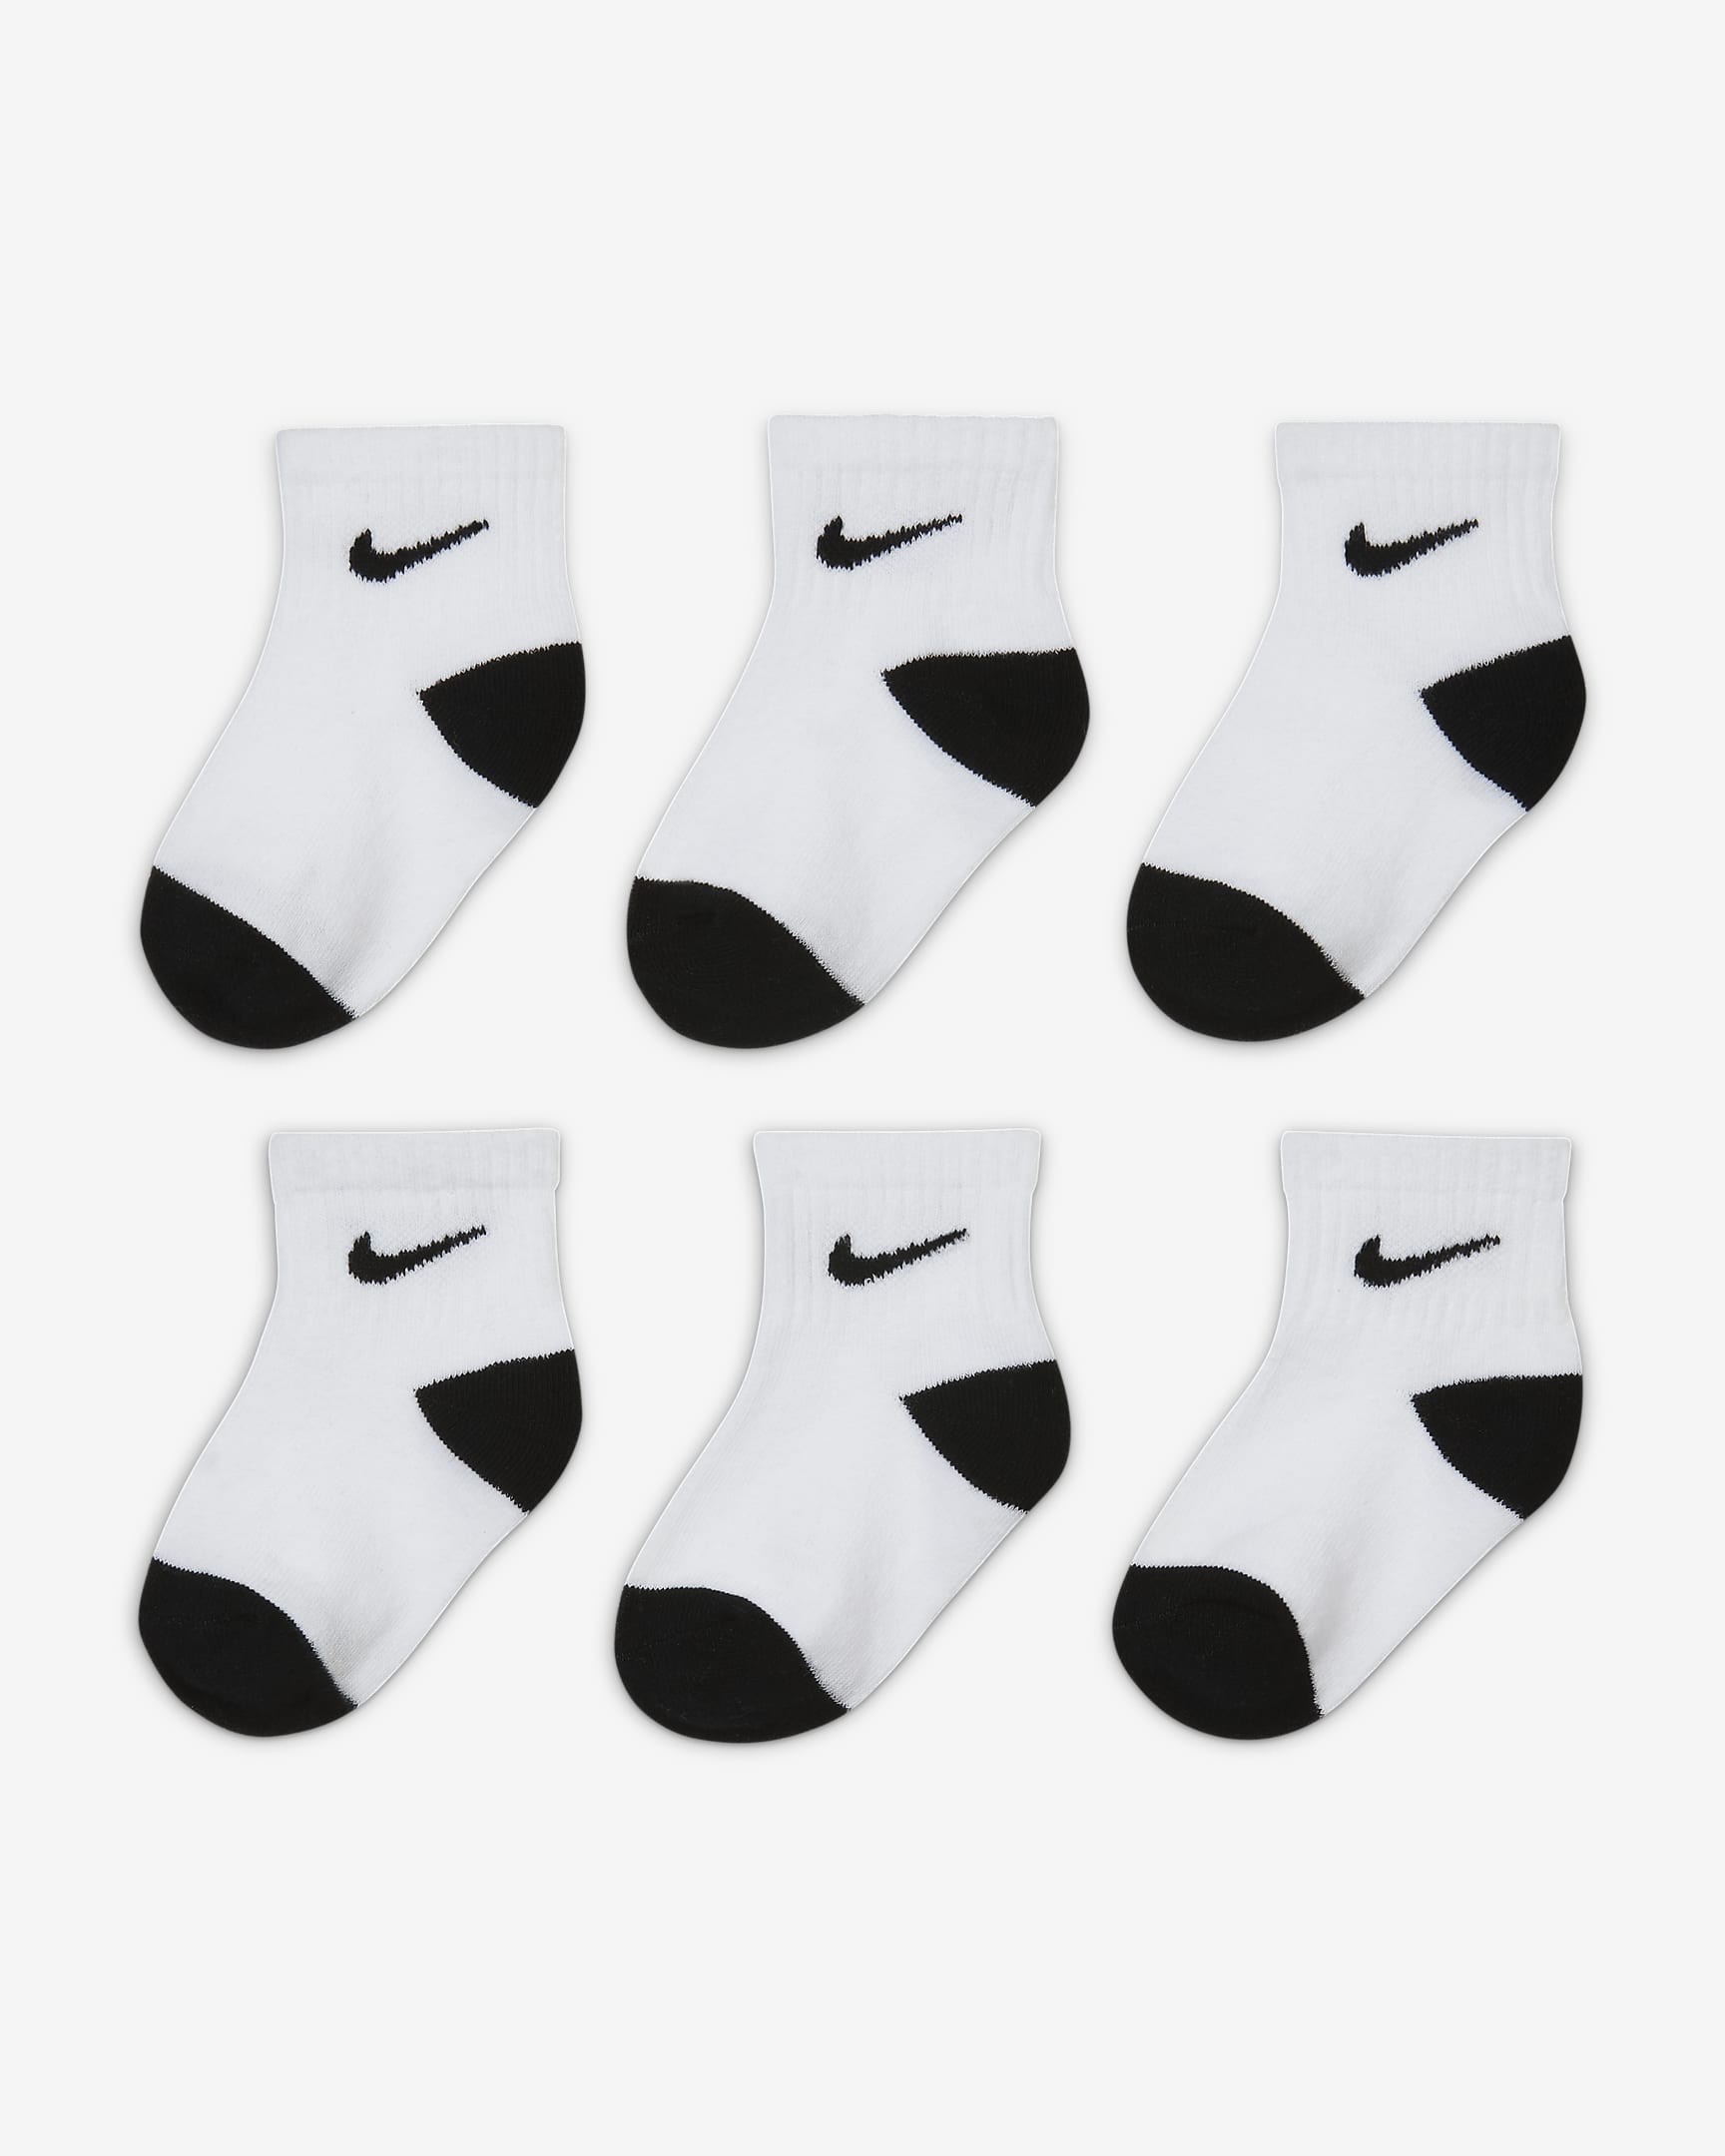 Nike Toddler Ankle Socks (6 Pairs). Nike.com